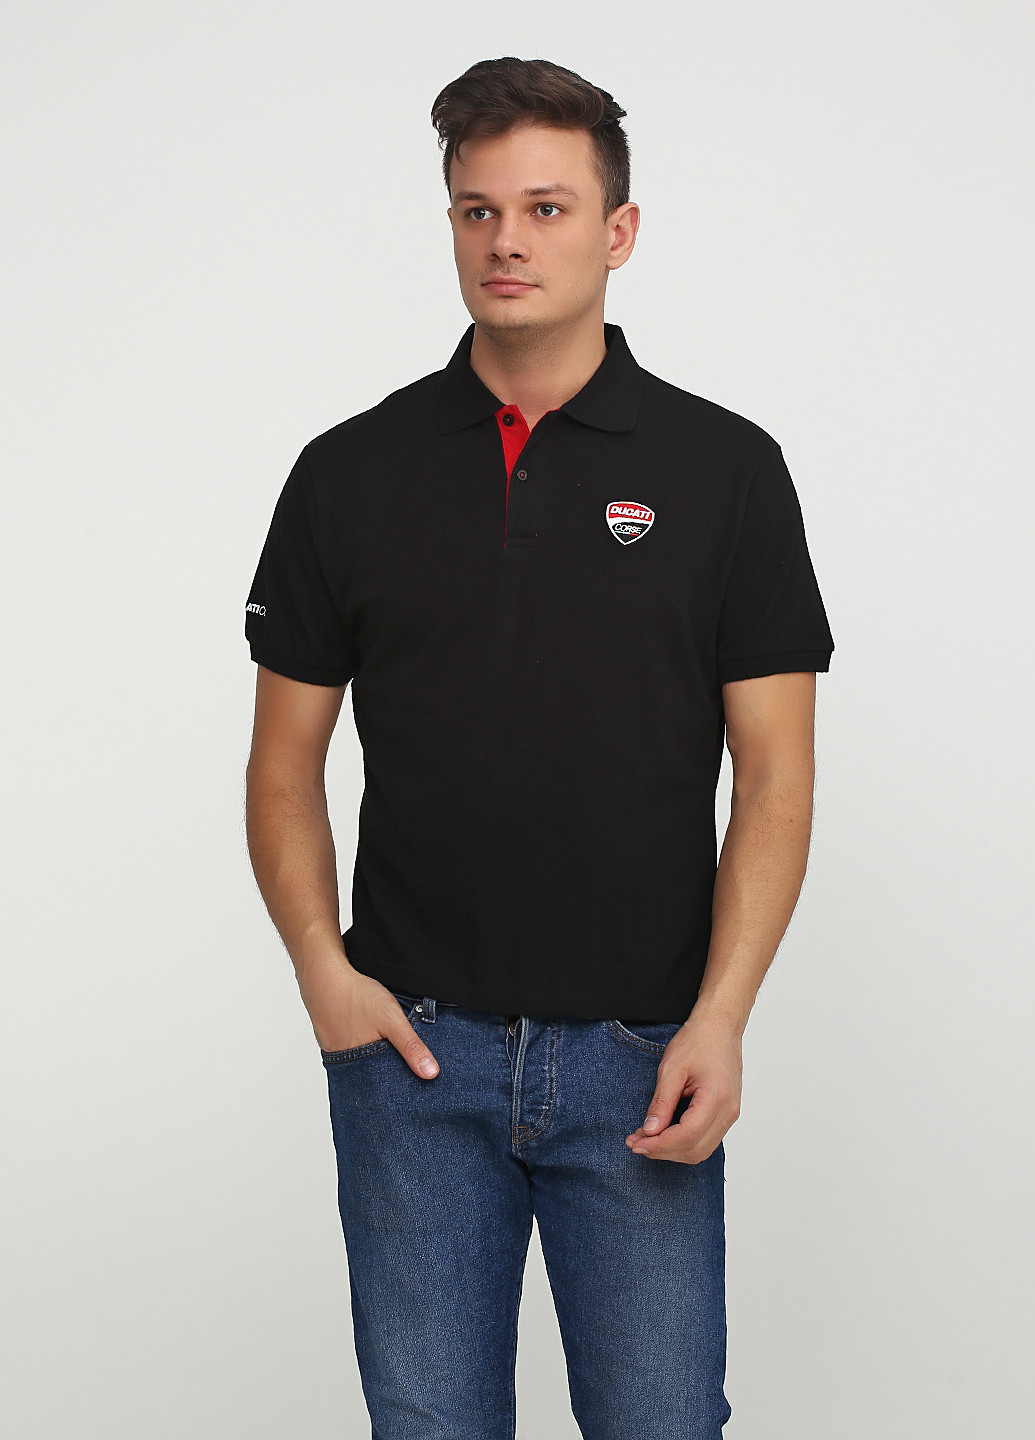 Черная футболка-поло для мужчин Ducati Corse с логотипом